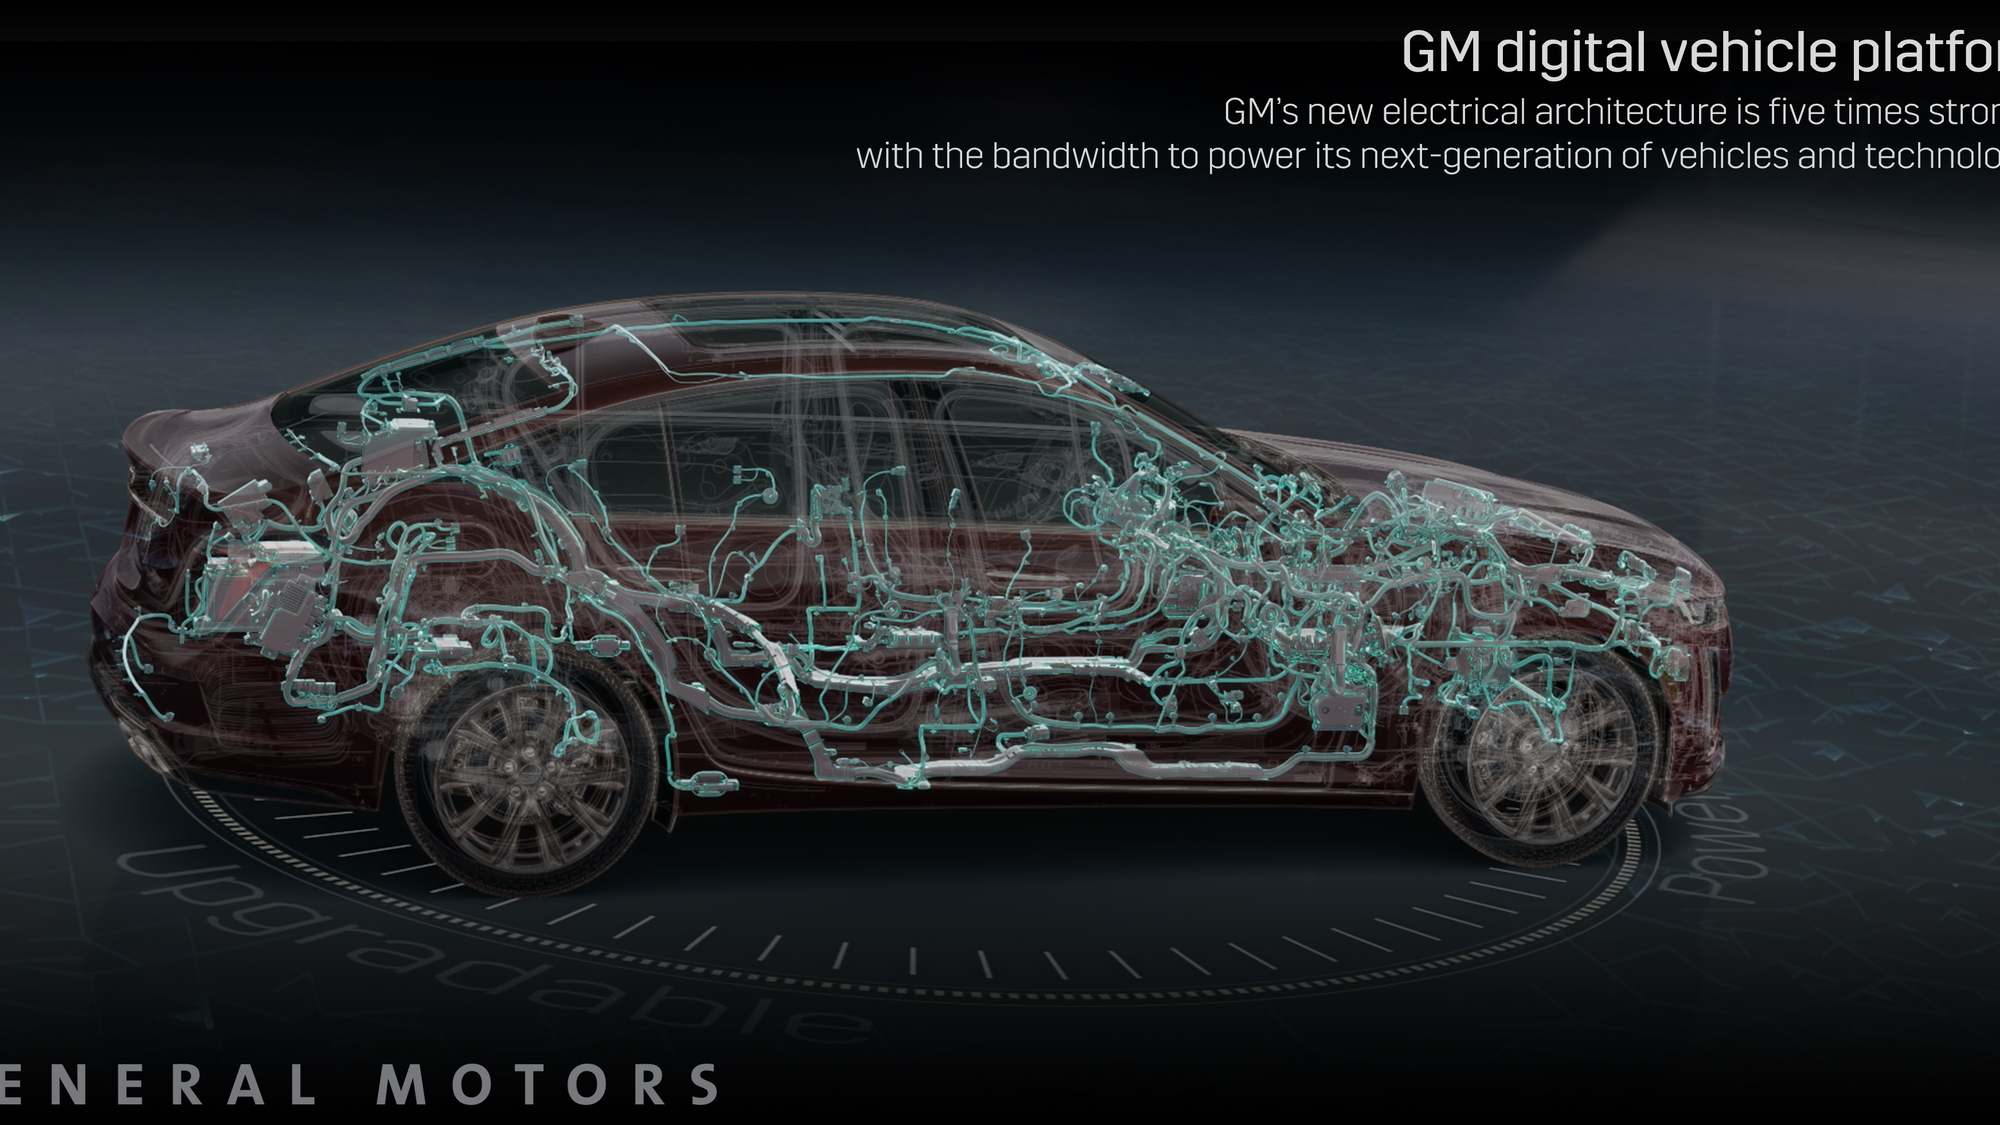 General Motors - Green Car Photos, News, Reviews, and Insights - Green Car  Reports - Page 10